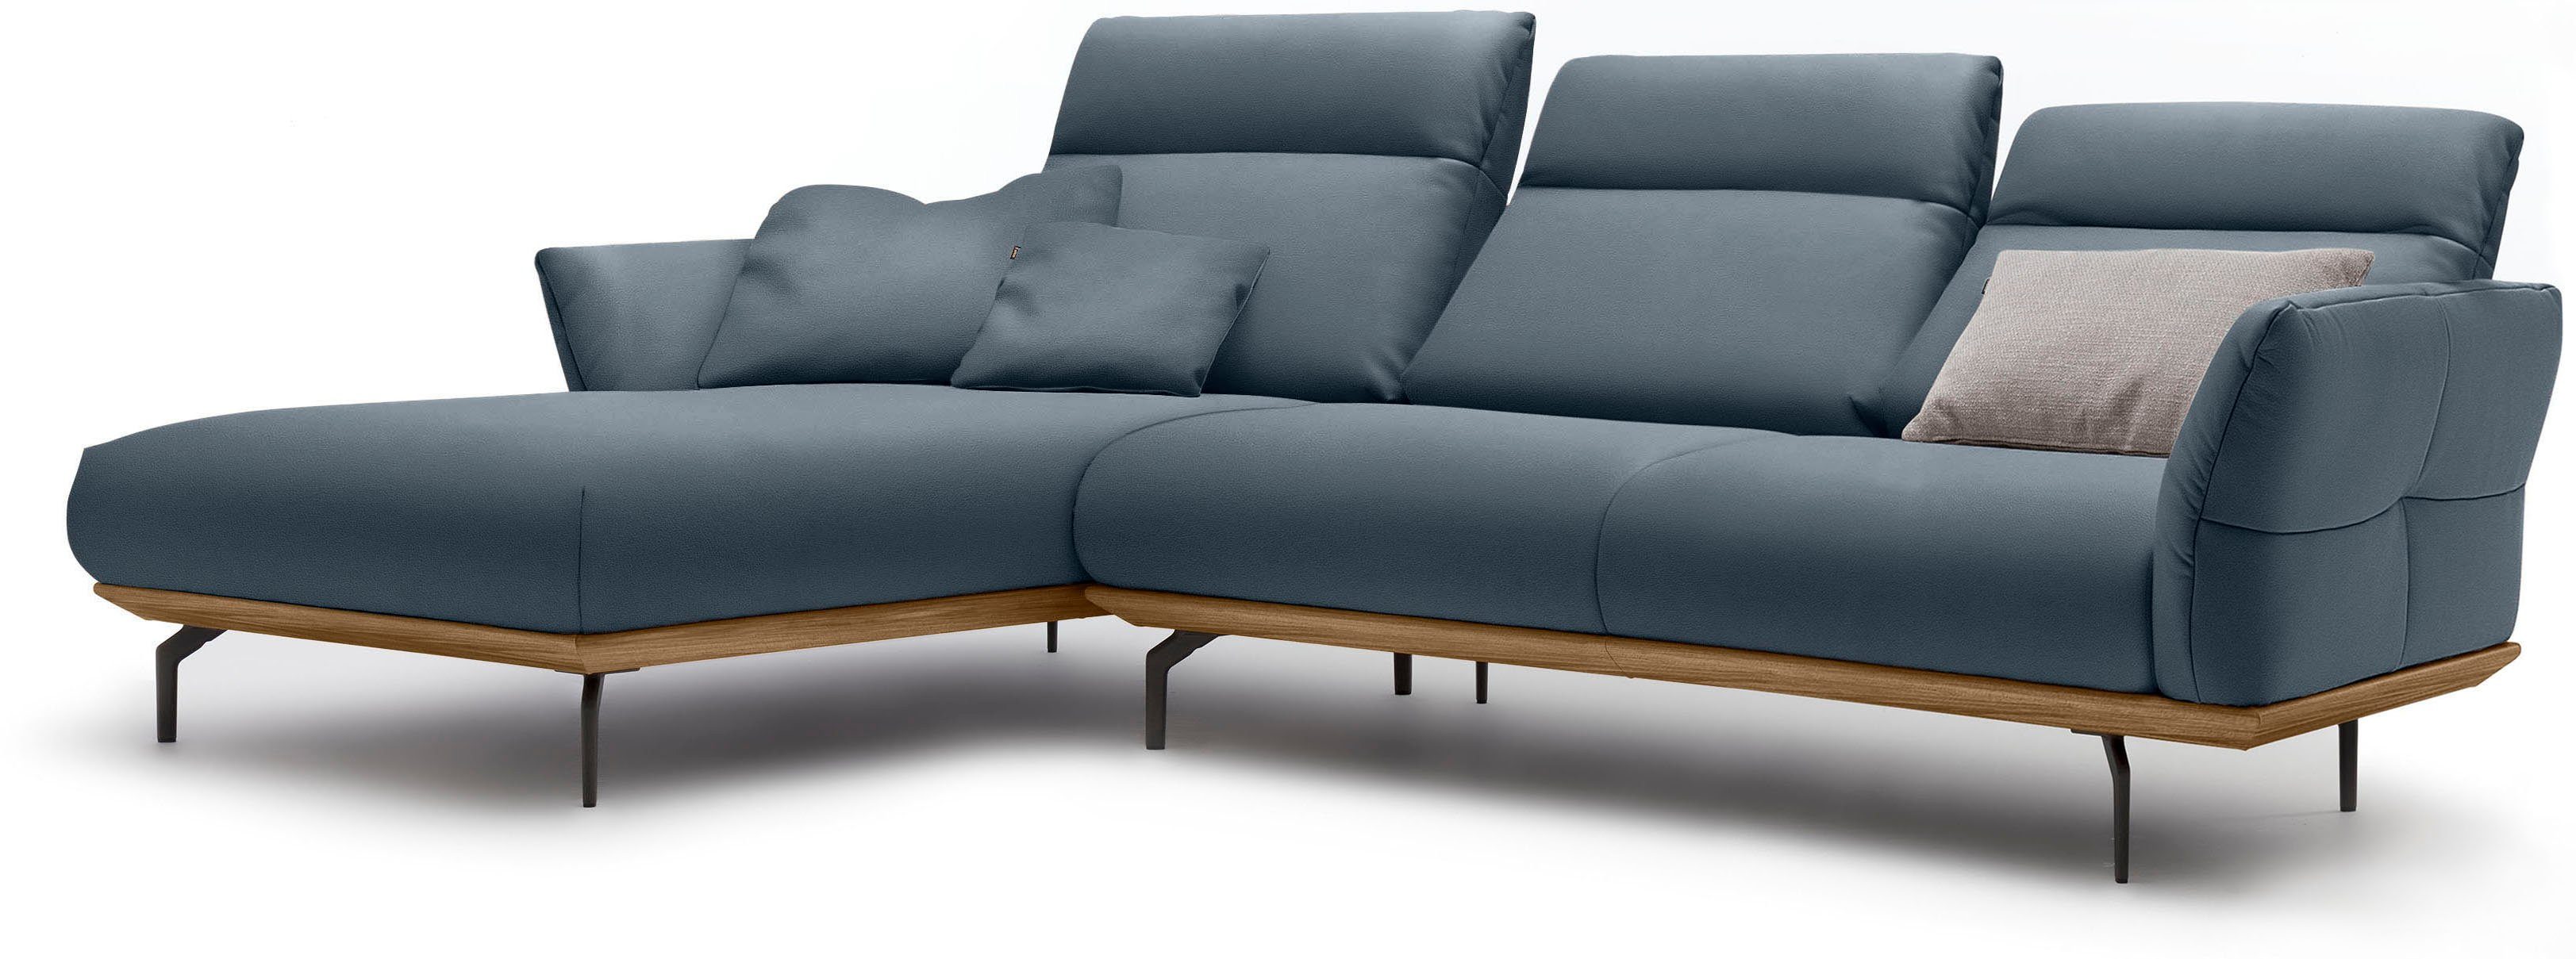 hülsta sofa Ecksofa hs.460, cm Sockel Breite Nussbaum, Winkelfüße in in Umbragrau, 298